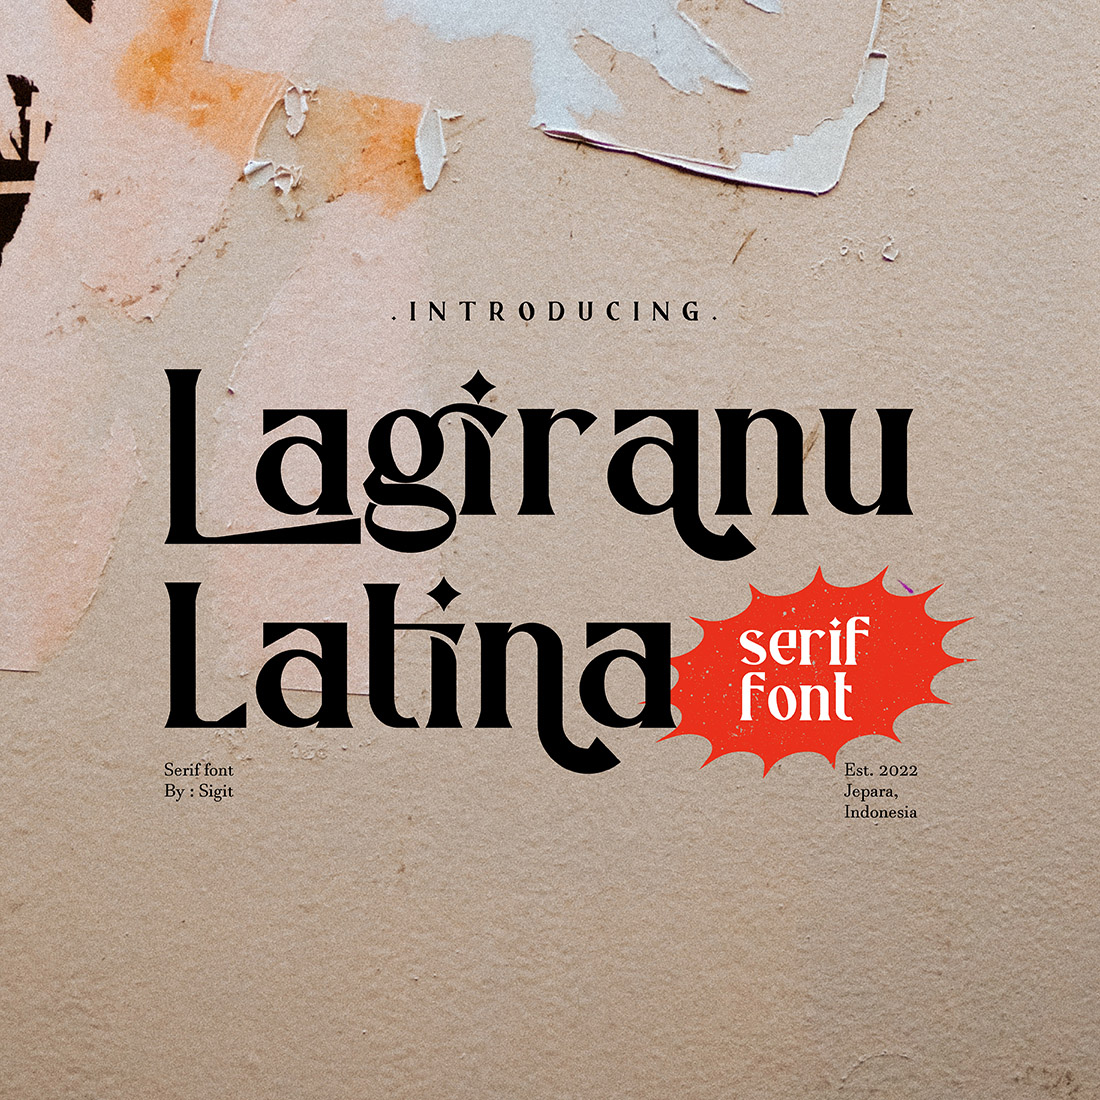 LAGIRANU LATINA | Modern Serif cover image.